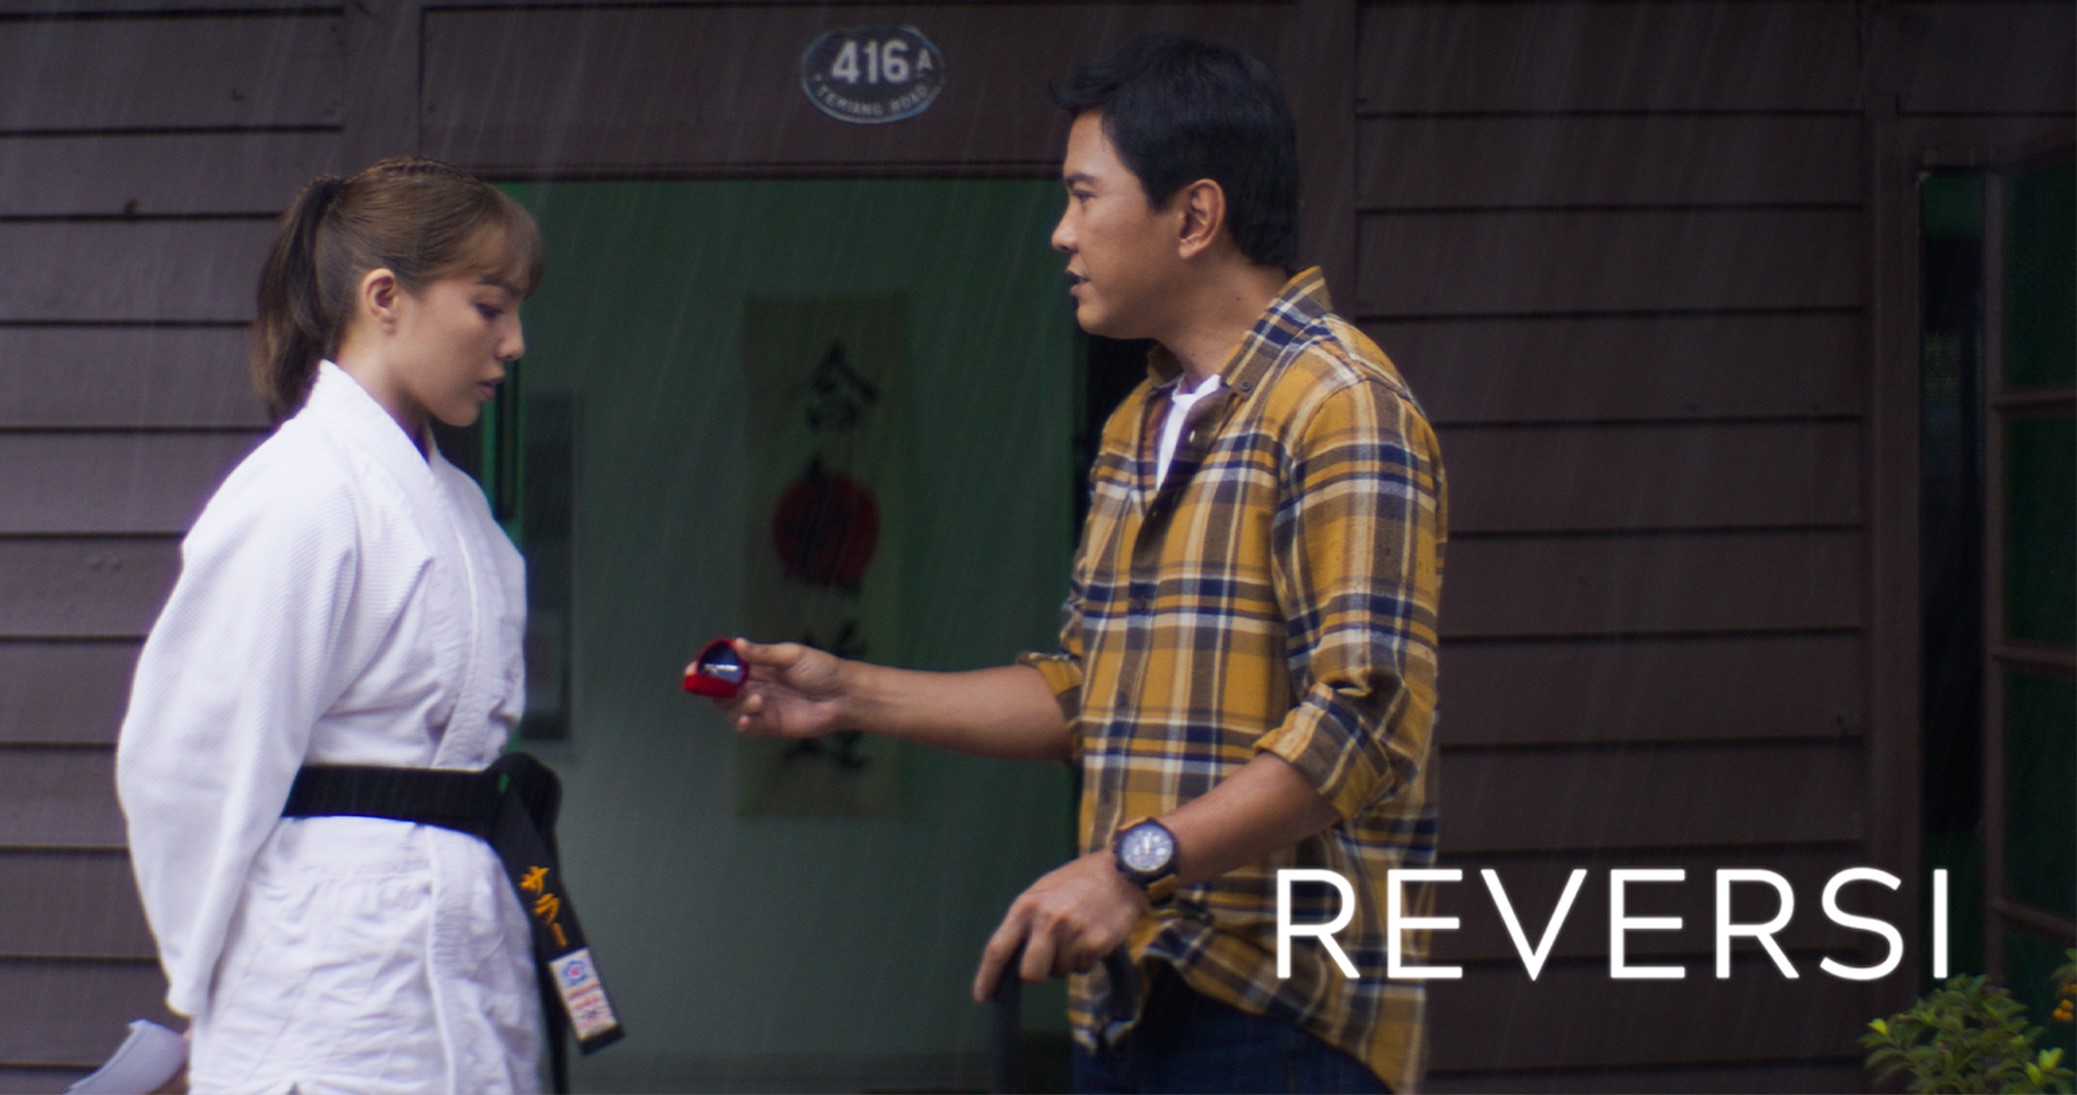 《REVERSI》是一个探讨爱与失去的故事。